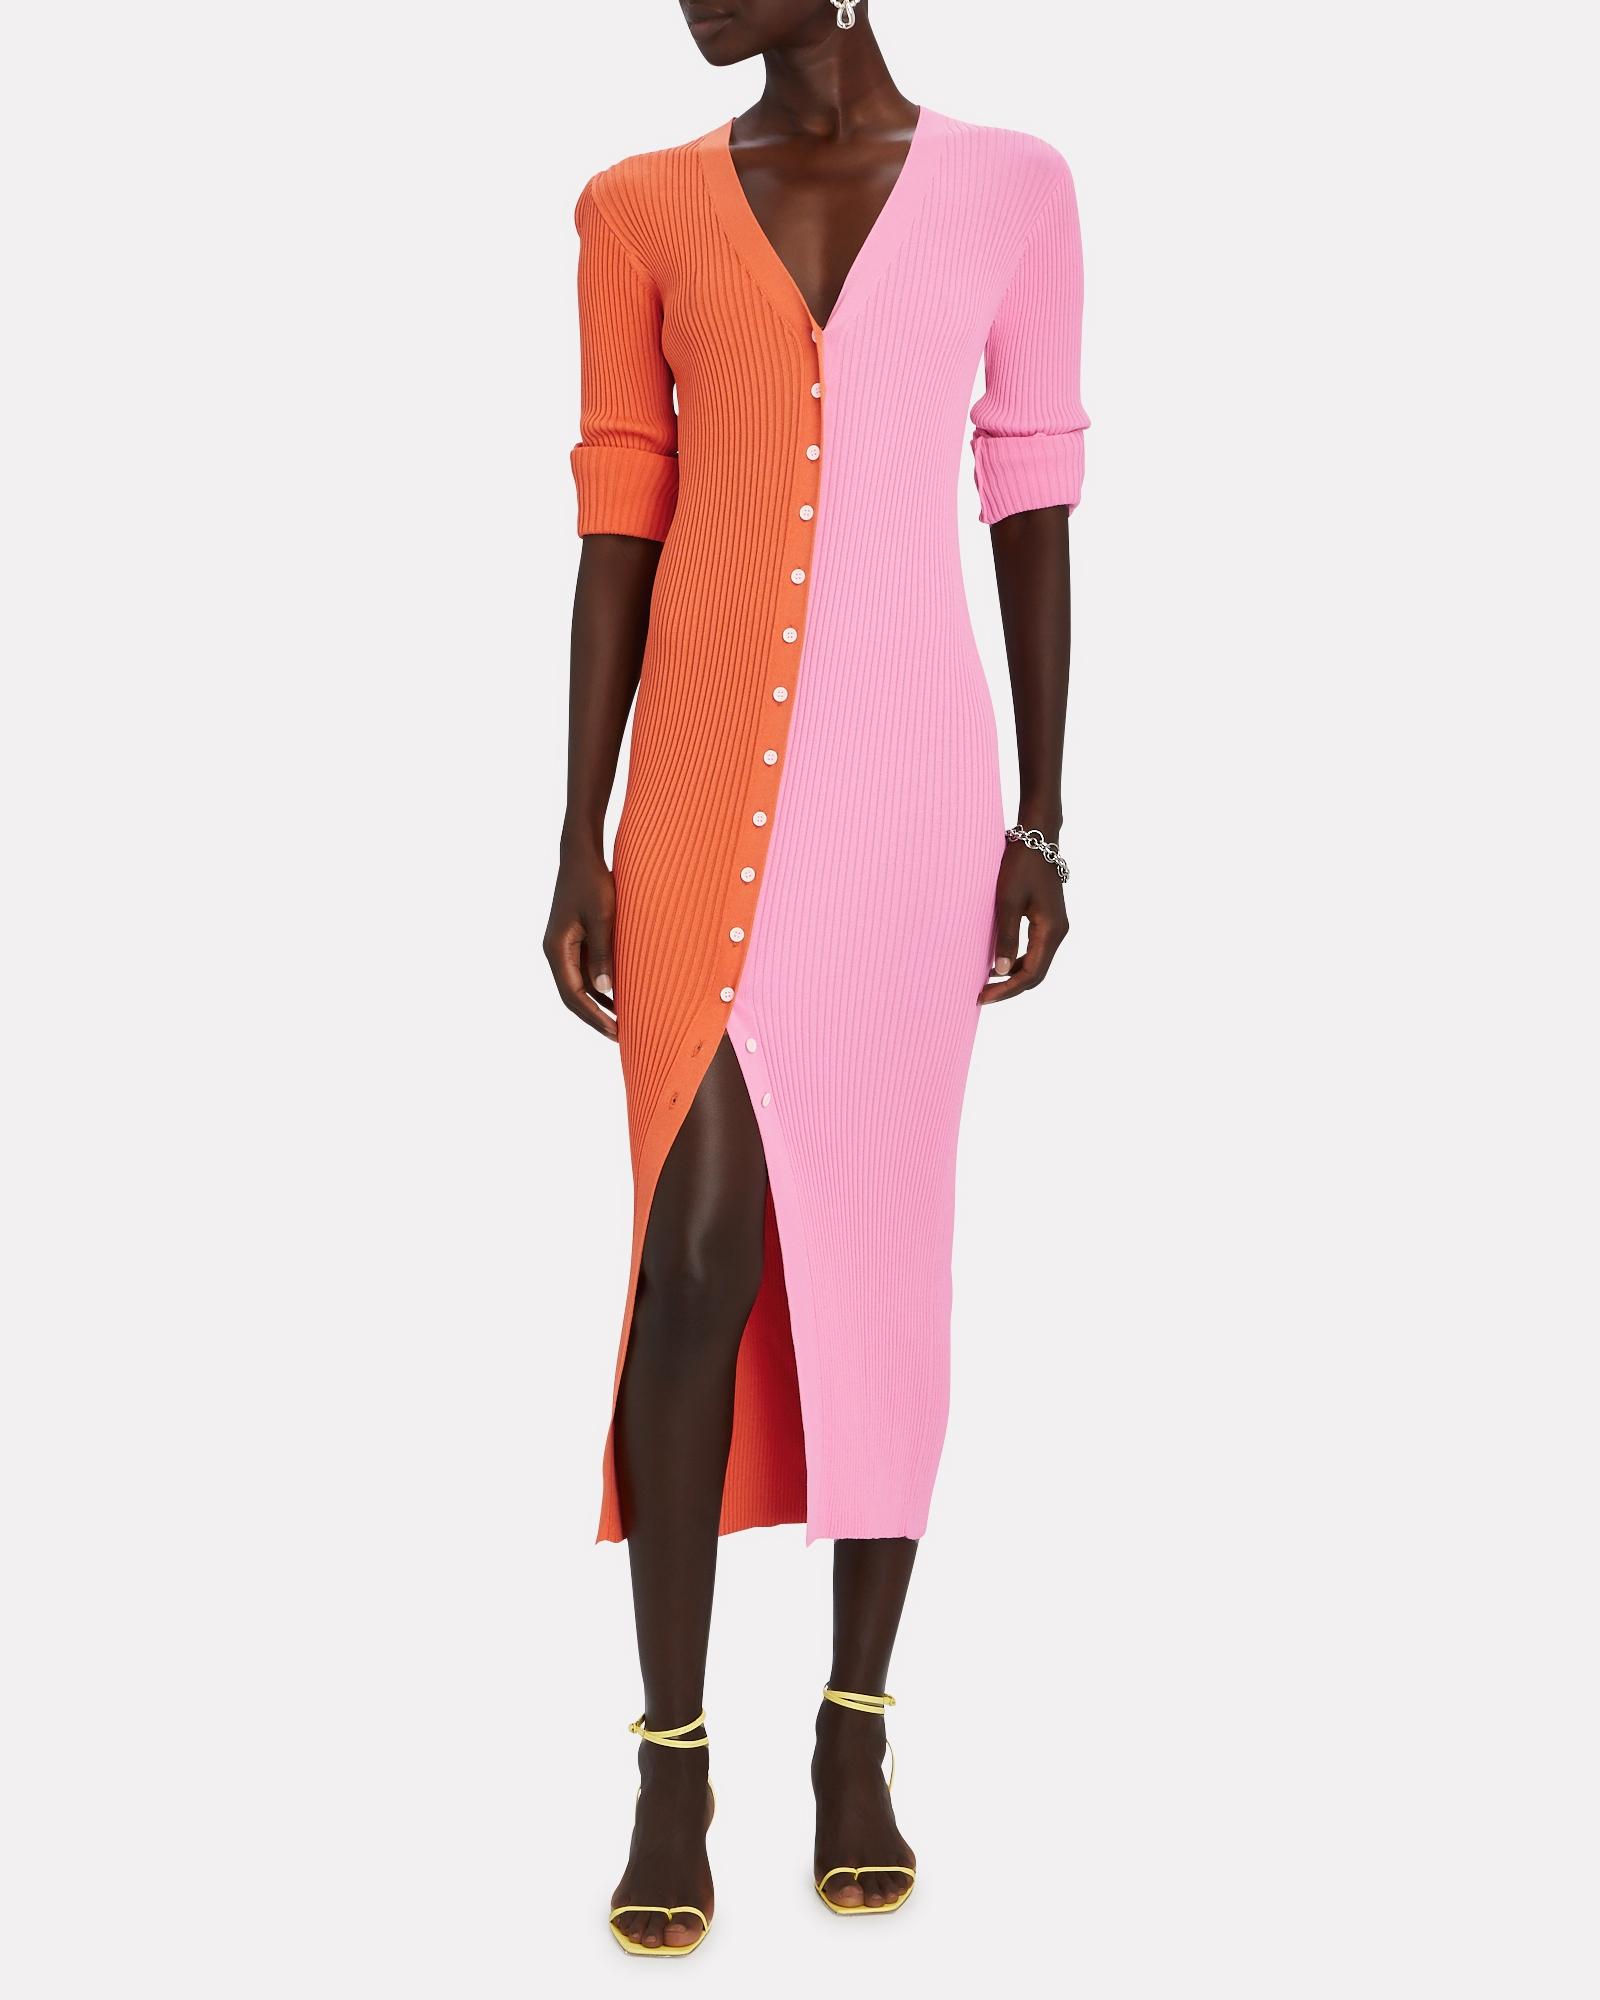 STAUD Synthetic Shoko Colorblock Sweater Dress in Orange/Pink (Pink) - Lyst